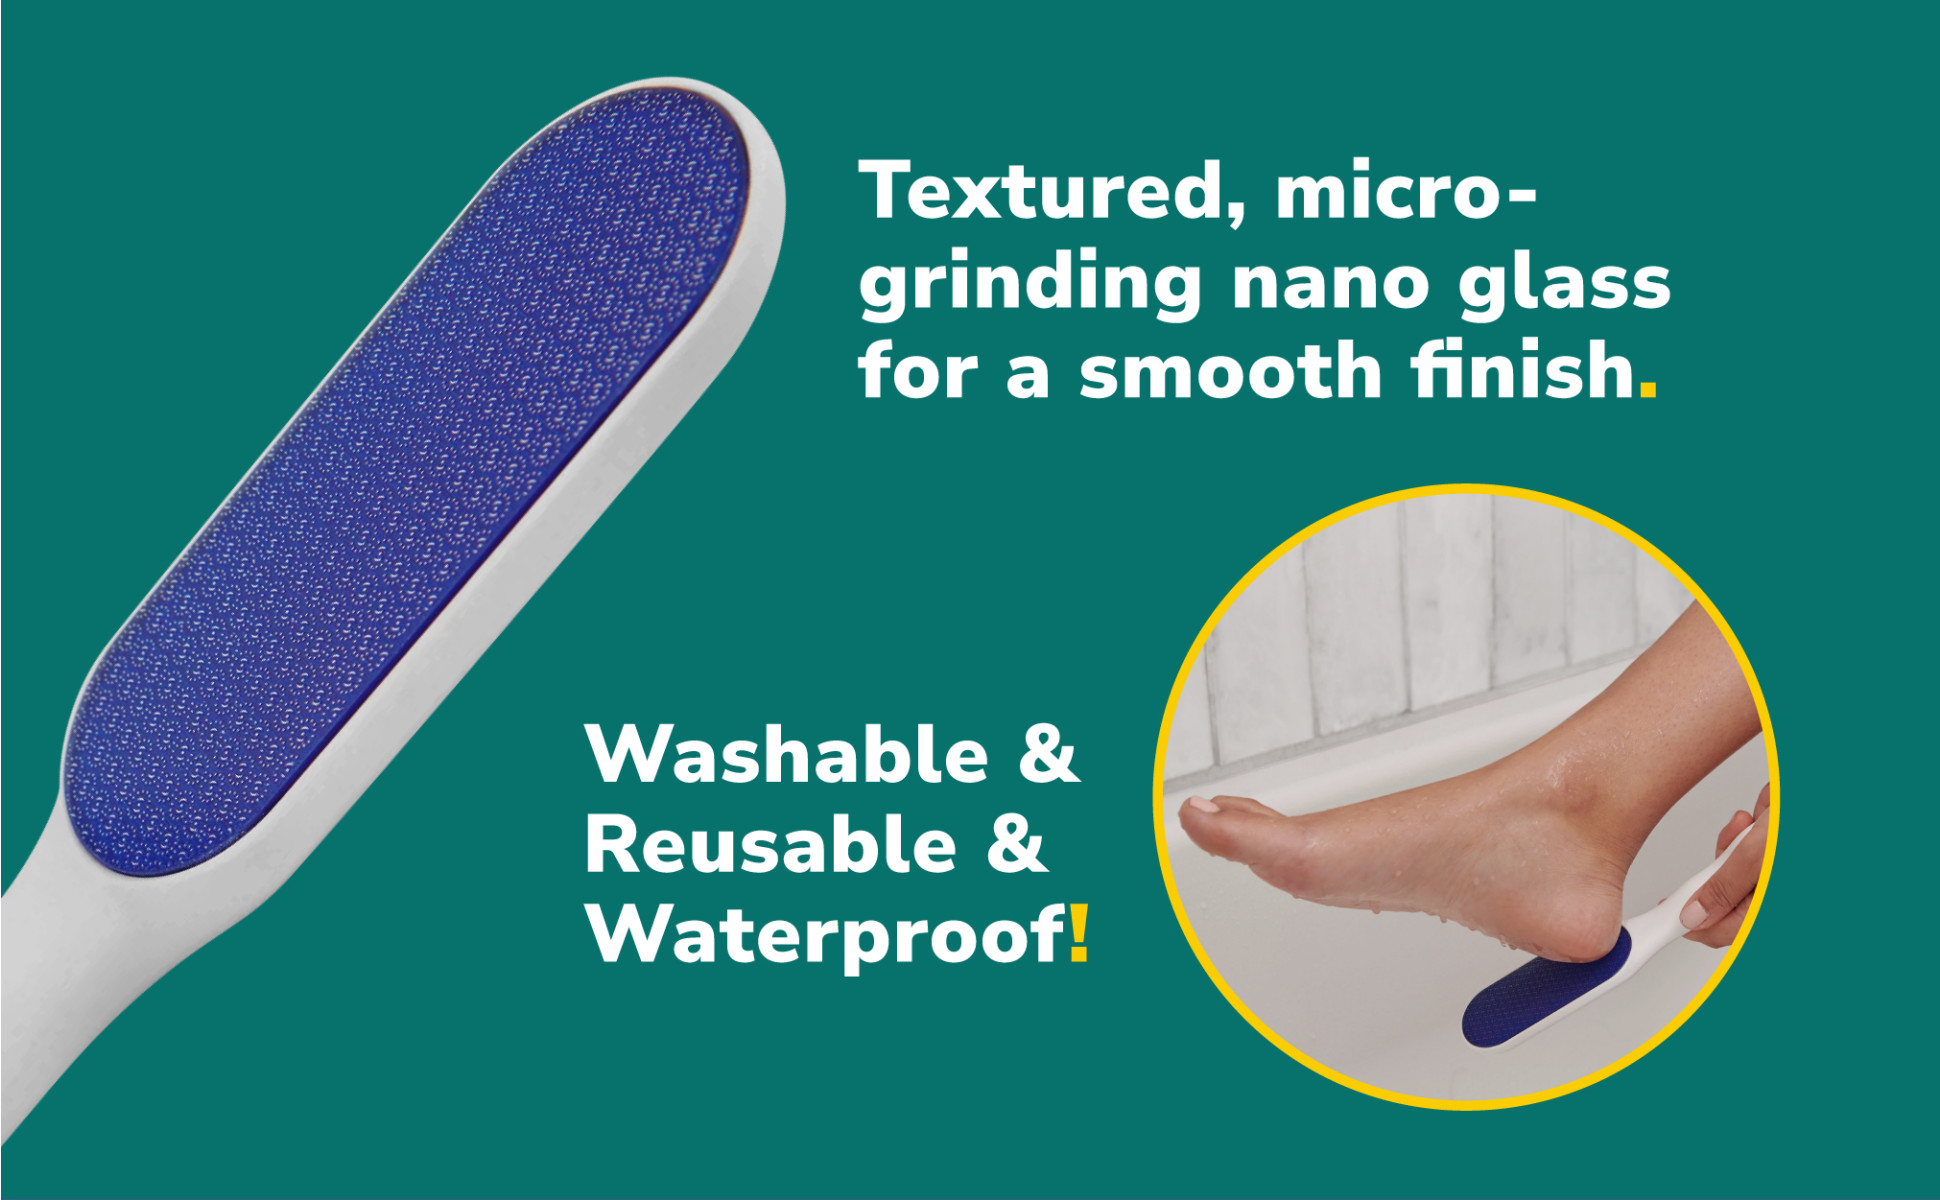 Hard Skin Remover Nano Glass Foot File| Dr. Scholl's